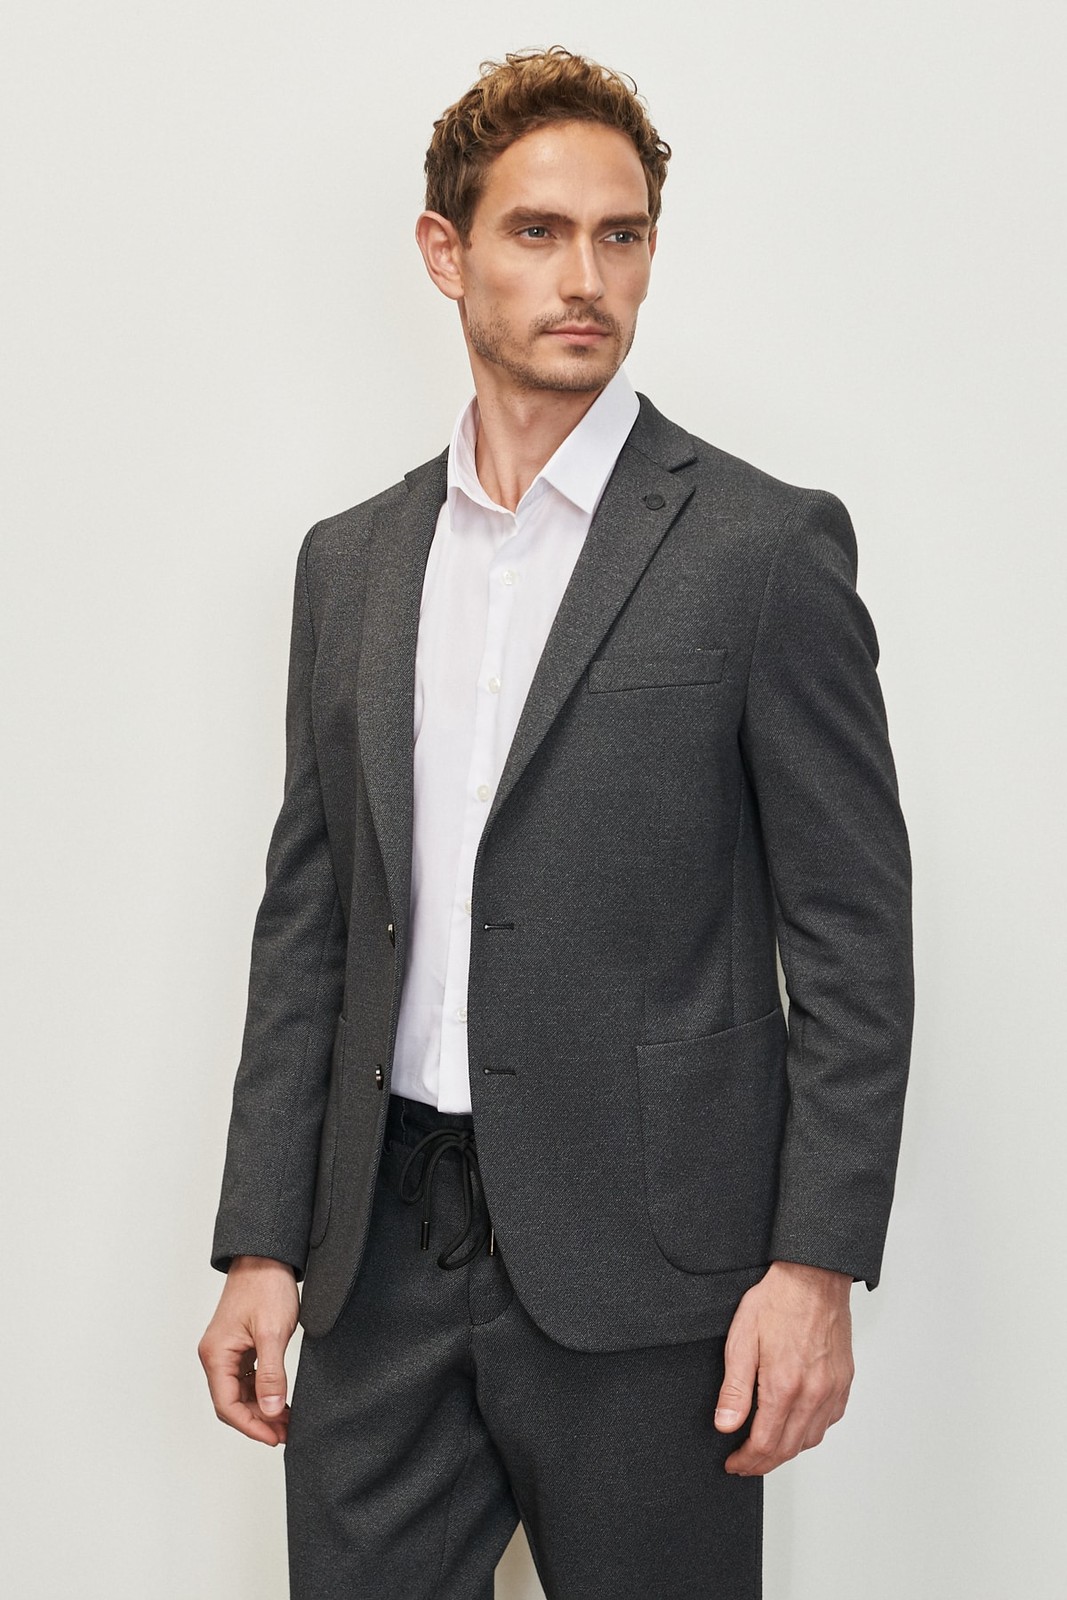 ALTINYILDIZ CLASSICS Men's Anthracite Extra Slim Fit Slim Fit Dovetail Collar Diagonal Patterned Suit.